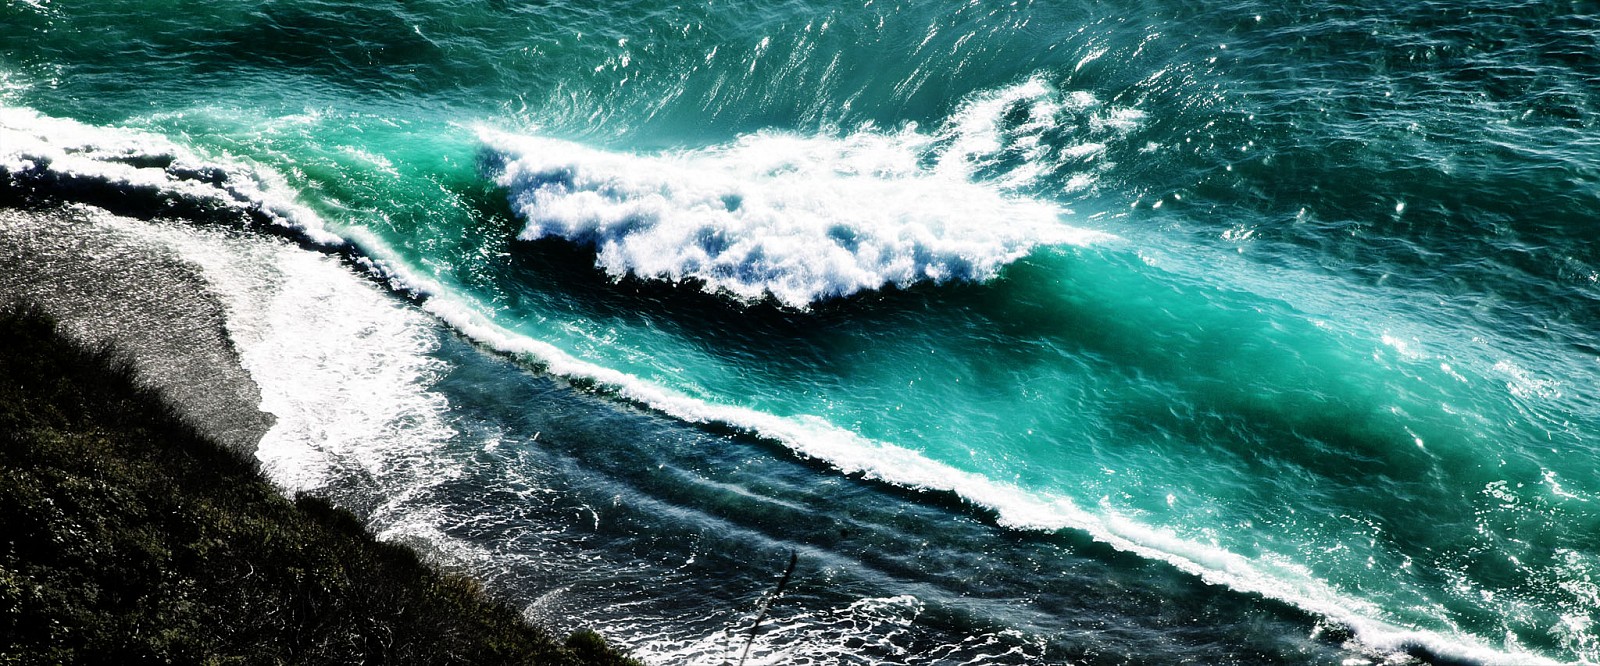 David Drebin, Crashing Waves, 2010
Digital C Print, 20 x 48 inches, 30 x 72 inches and 40 x 96 inches